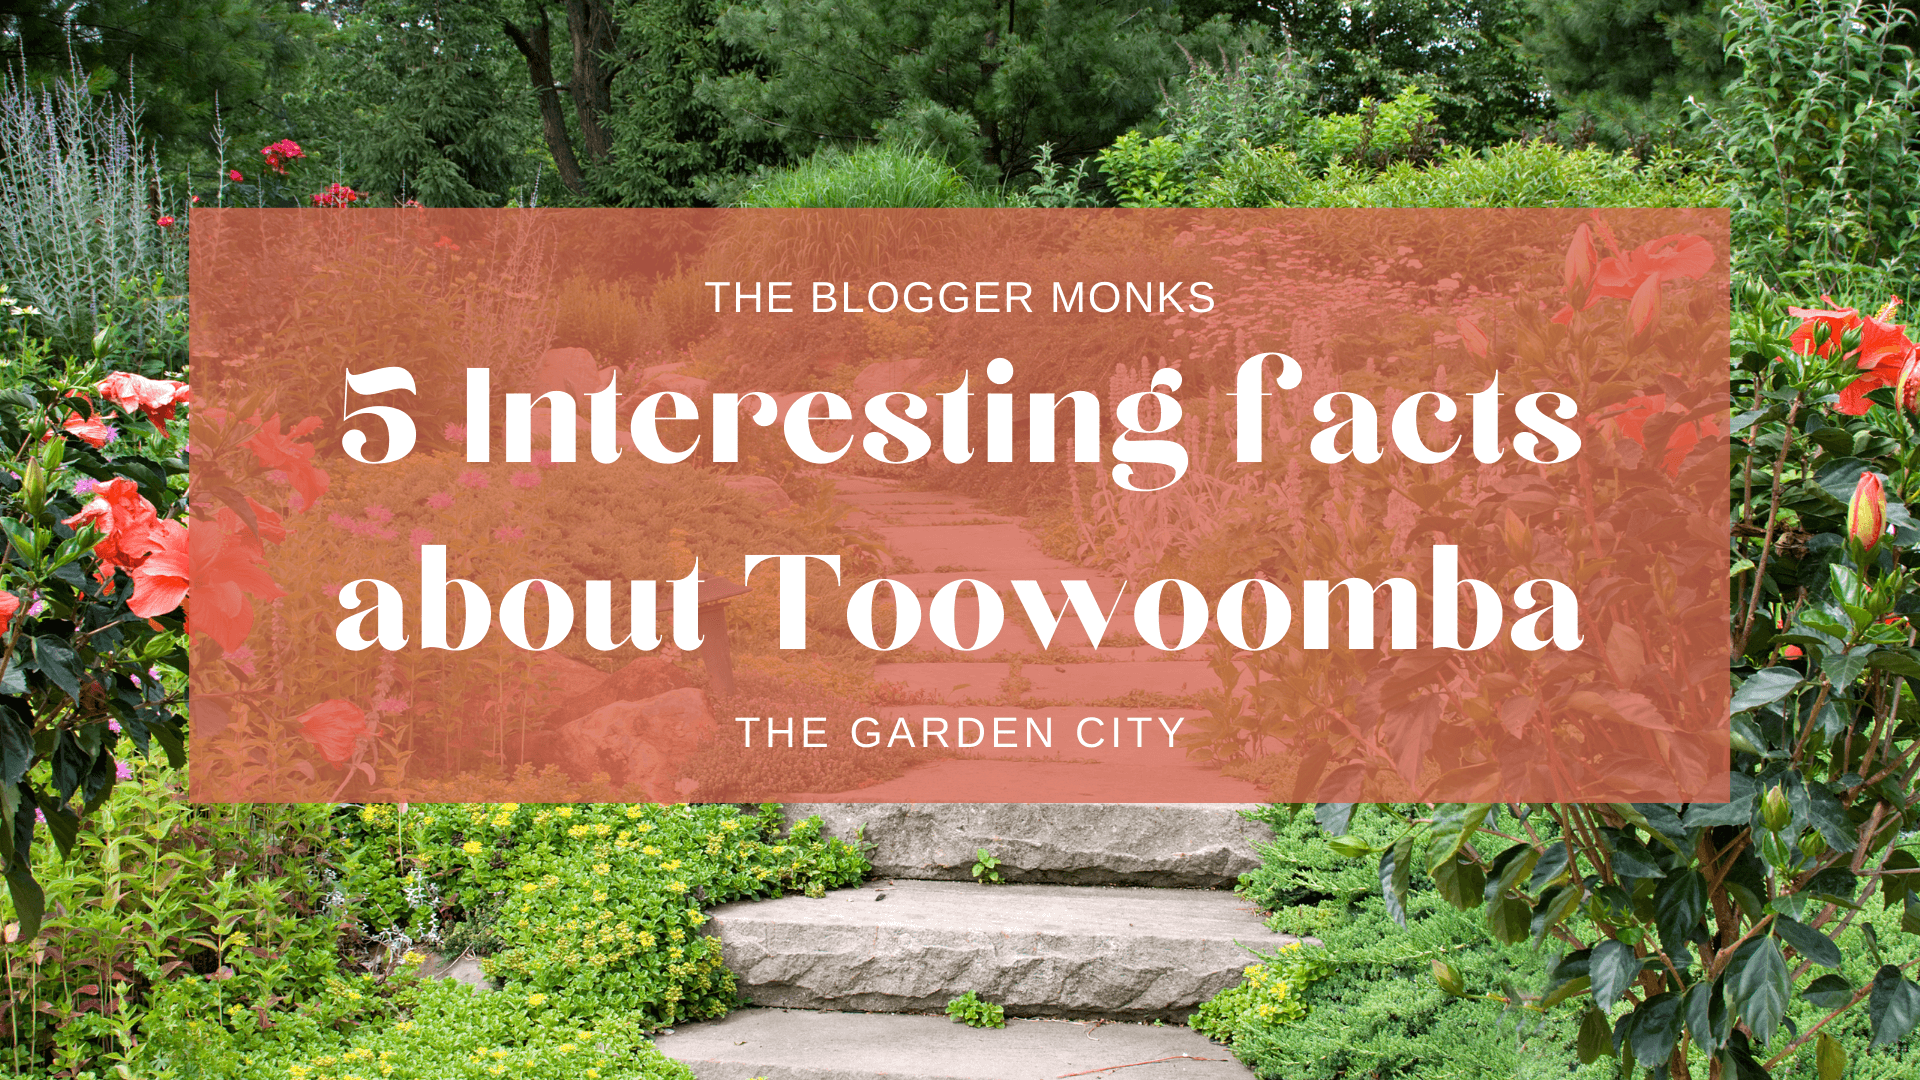 toowoomba the garden city